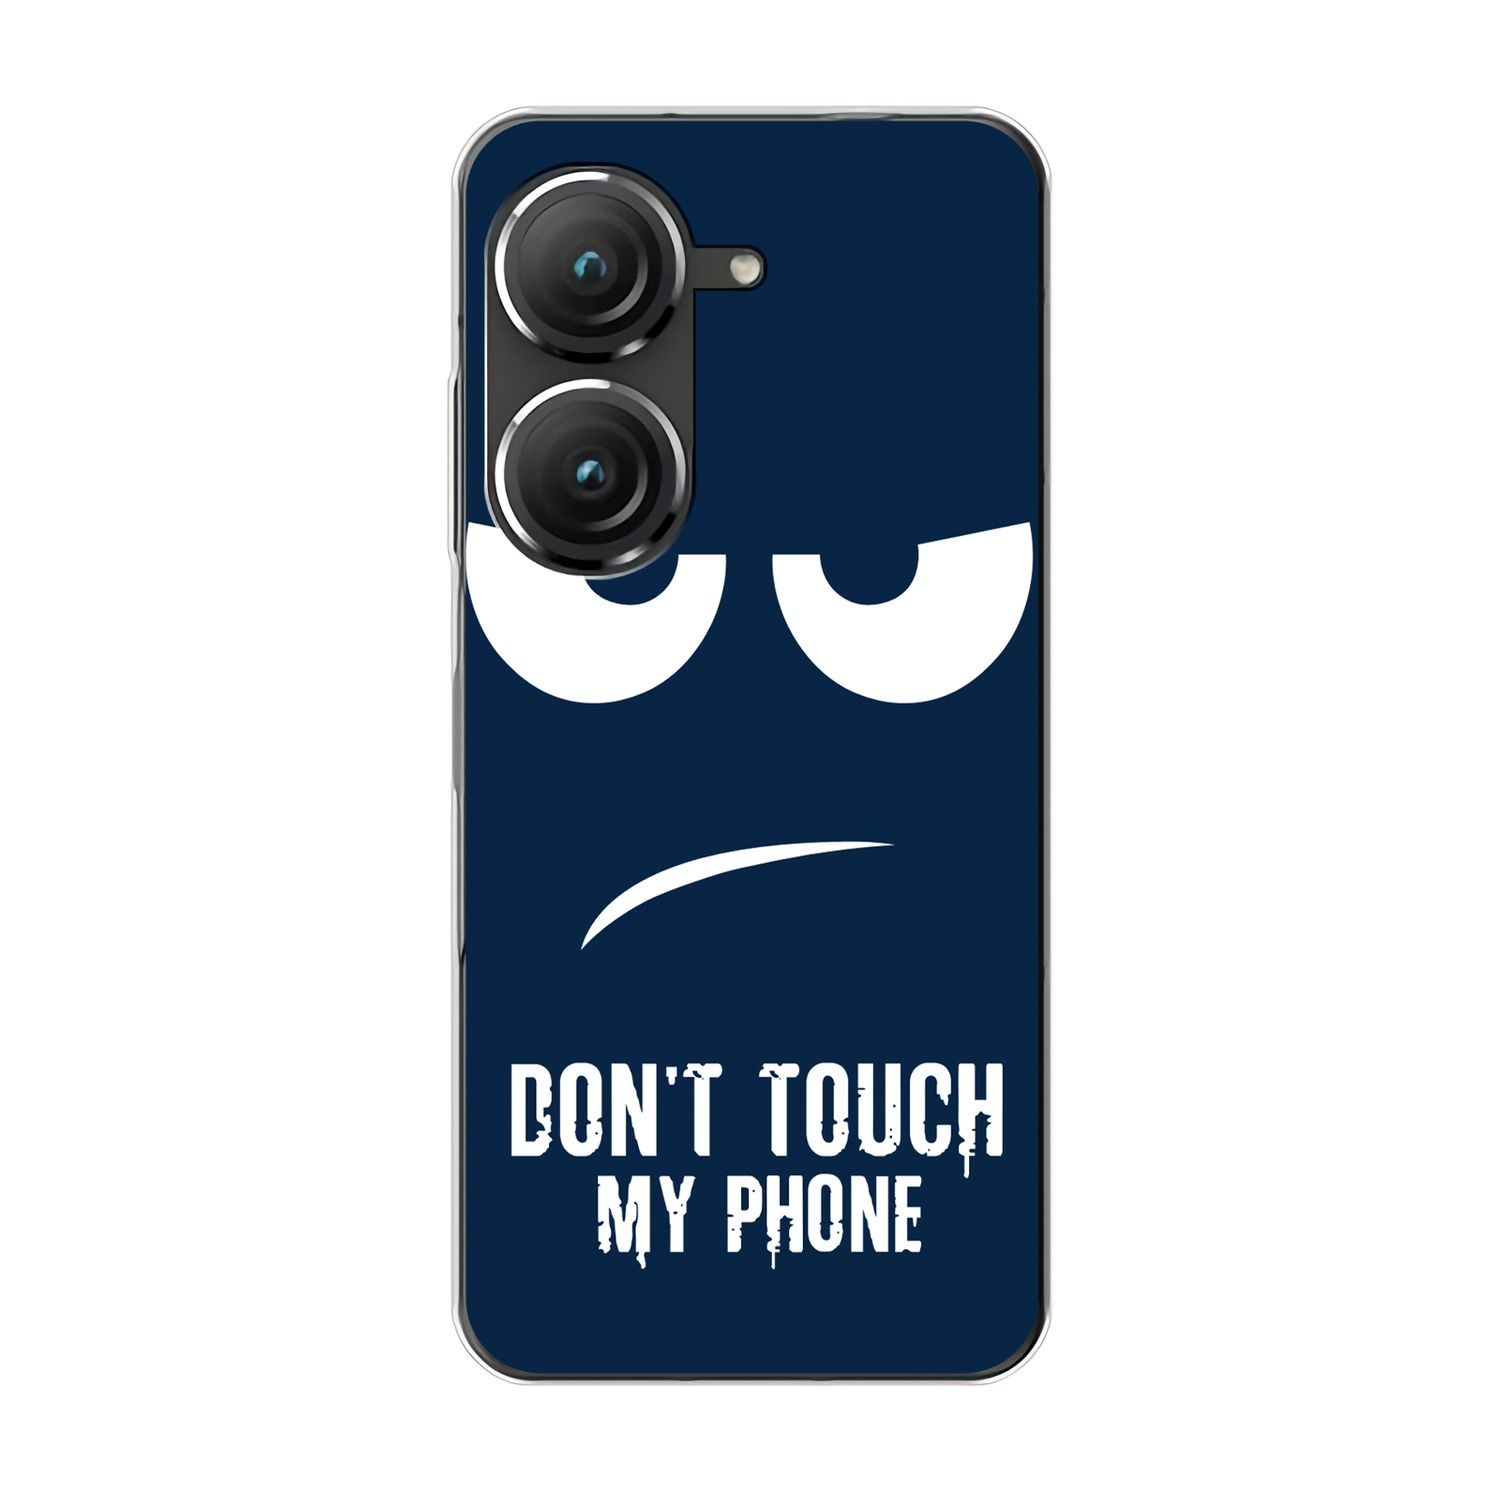 Asus, My Zenfone Blau Touch 9, Dont DESIGN Backcover, Case, KÖNIG Phone